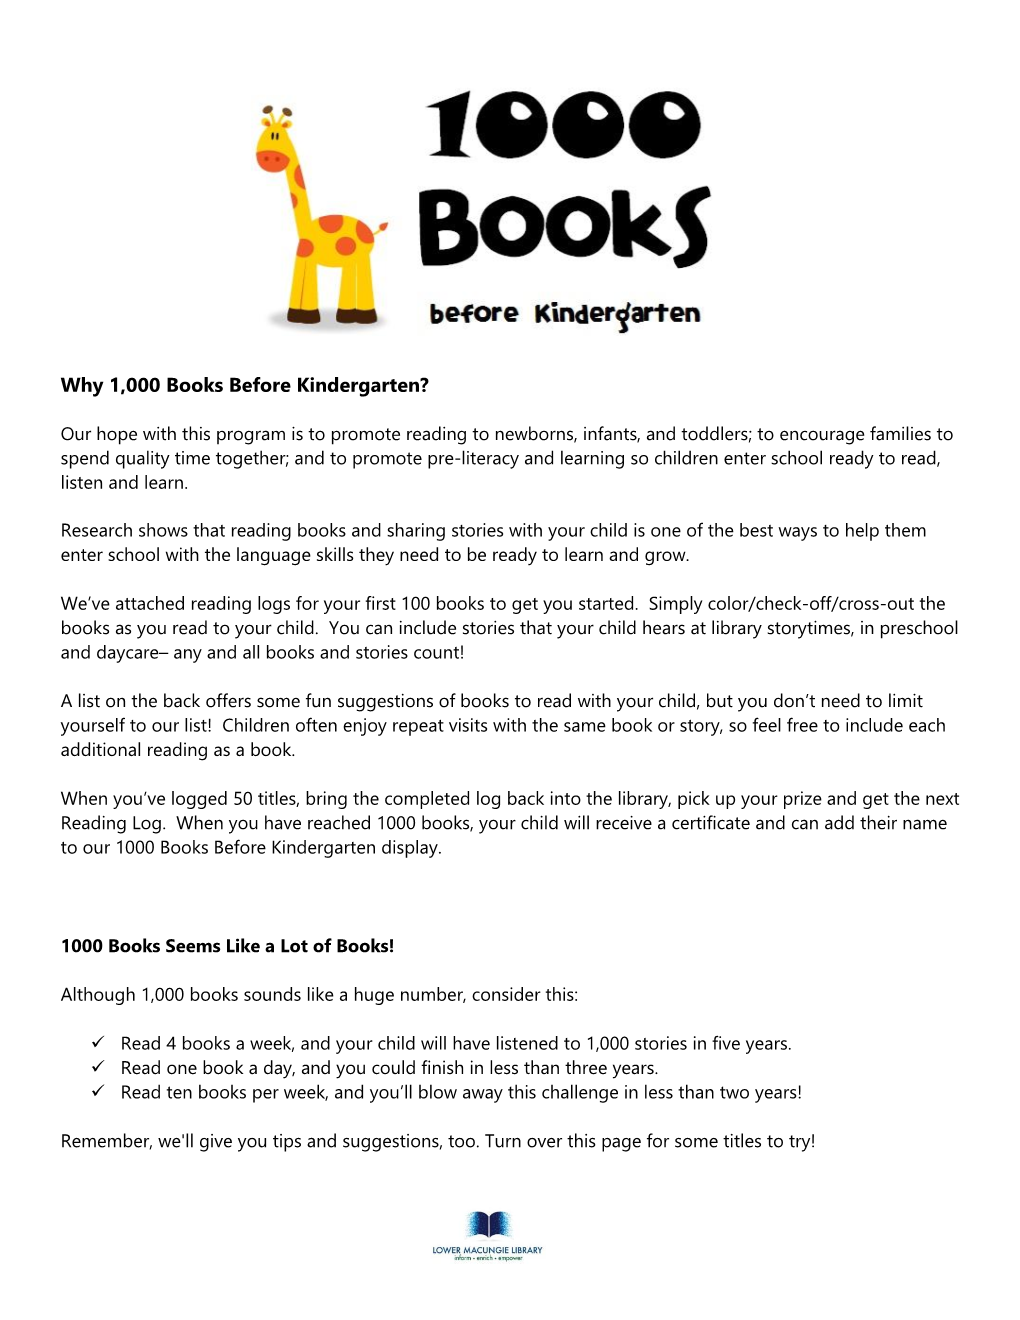 Why 1,000 Books Before Kindergarten?